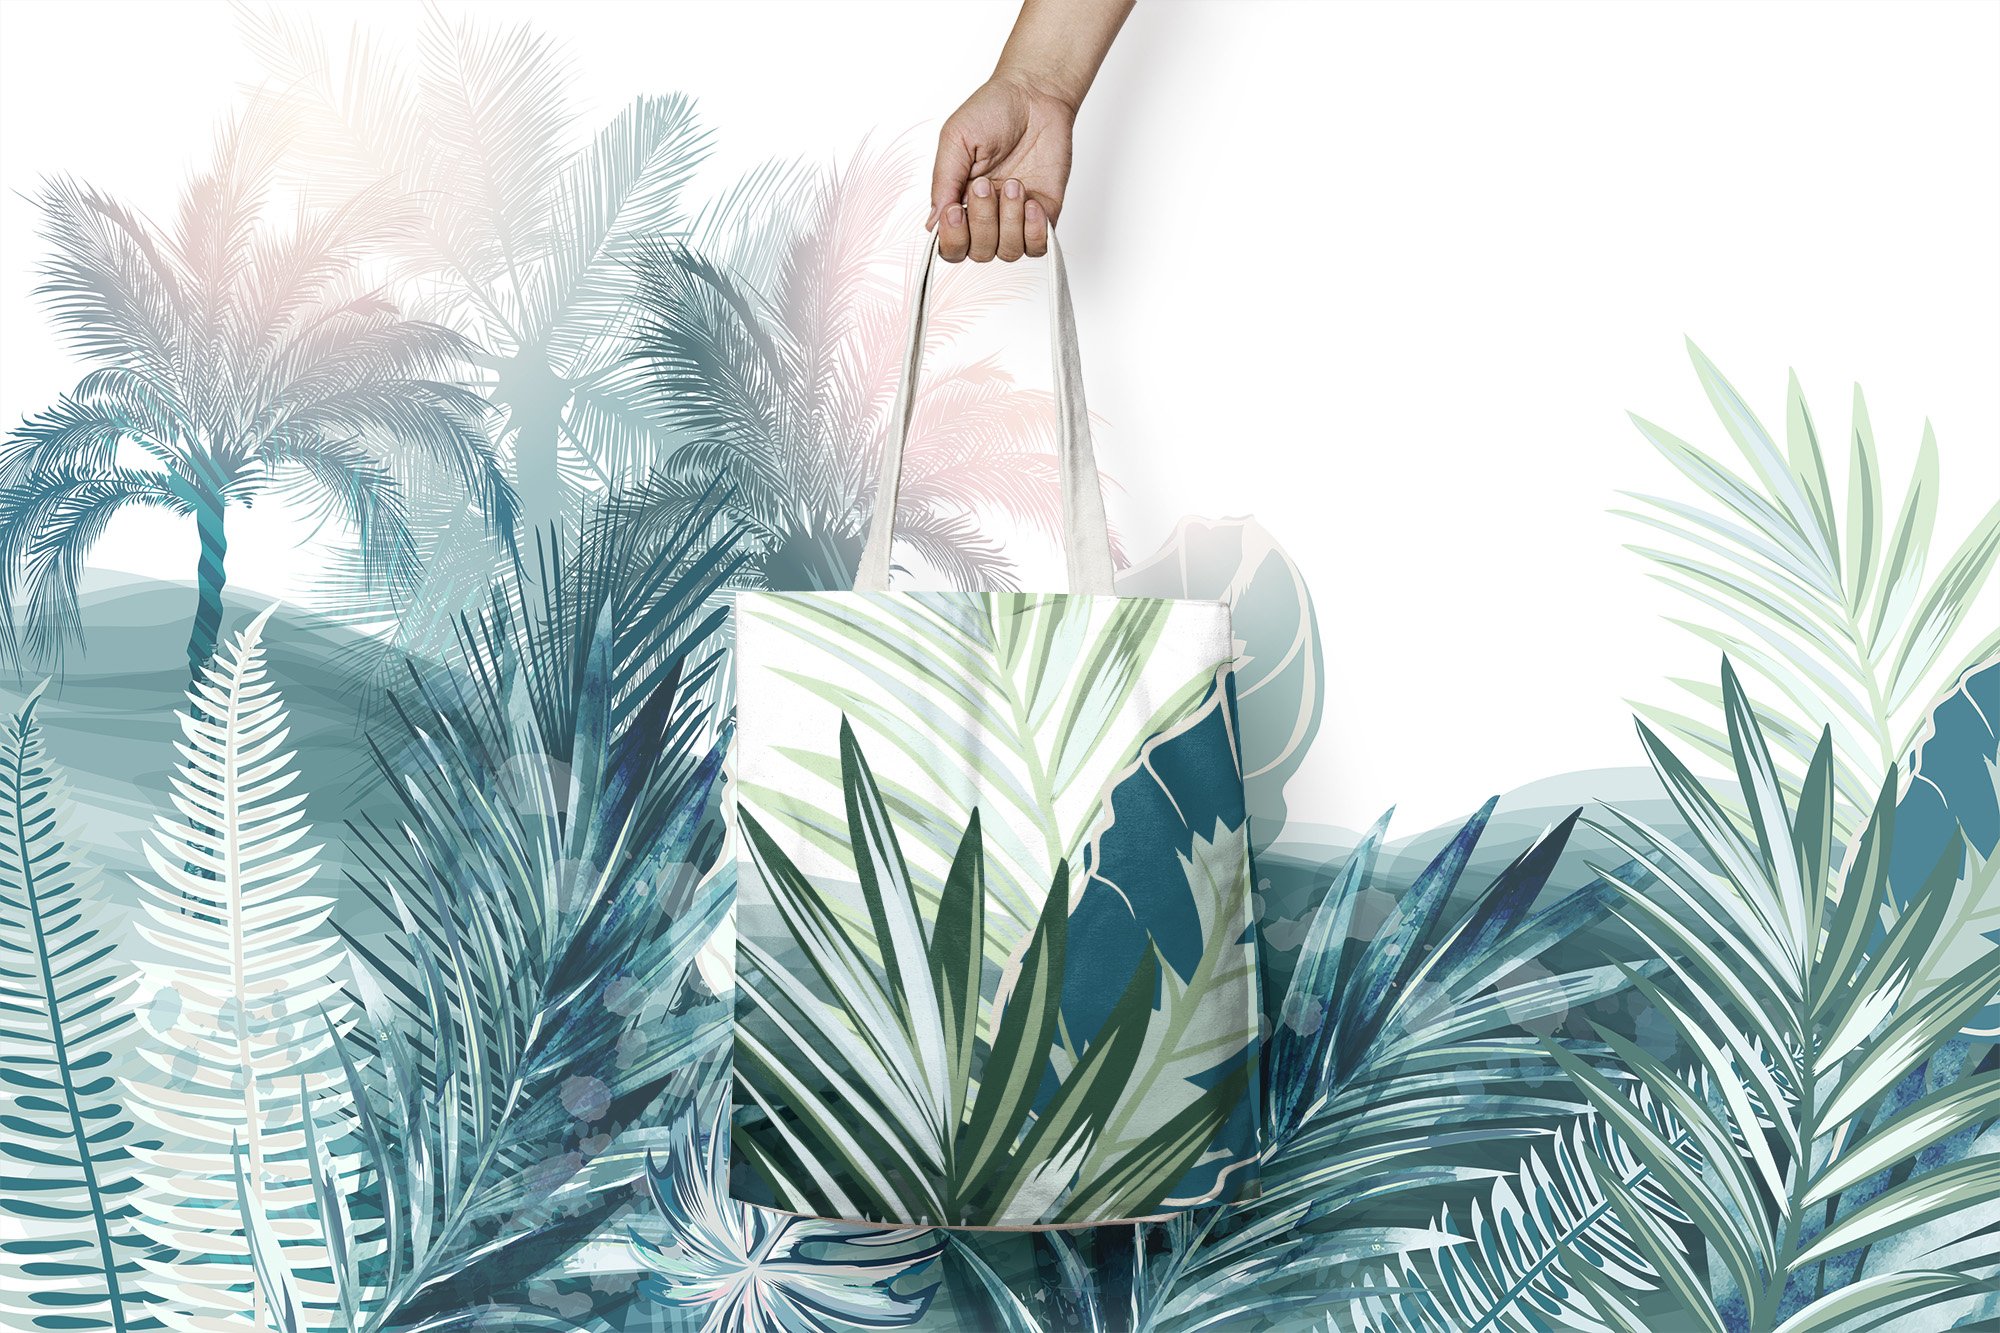 Eco bag with a palm.